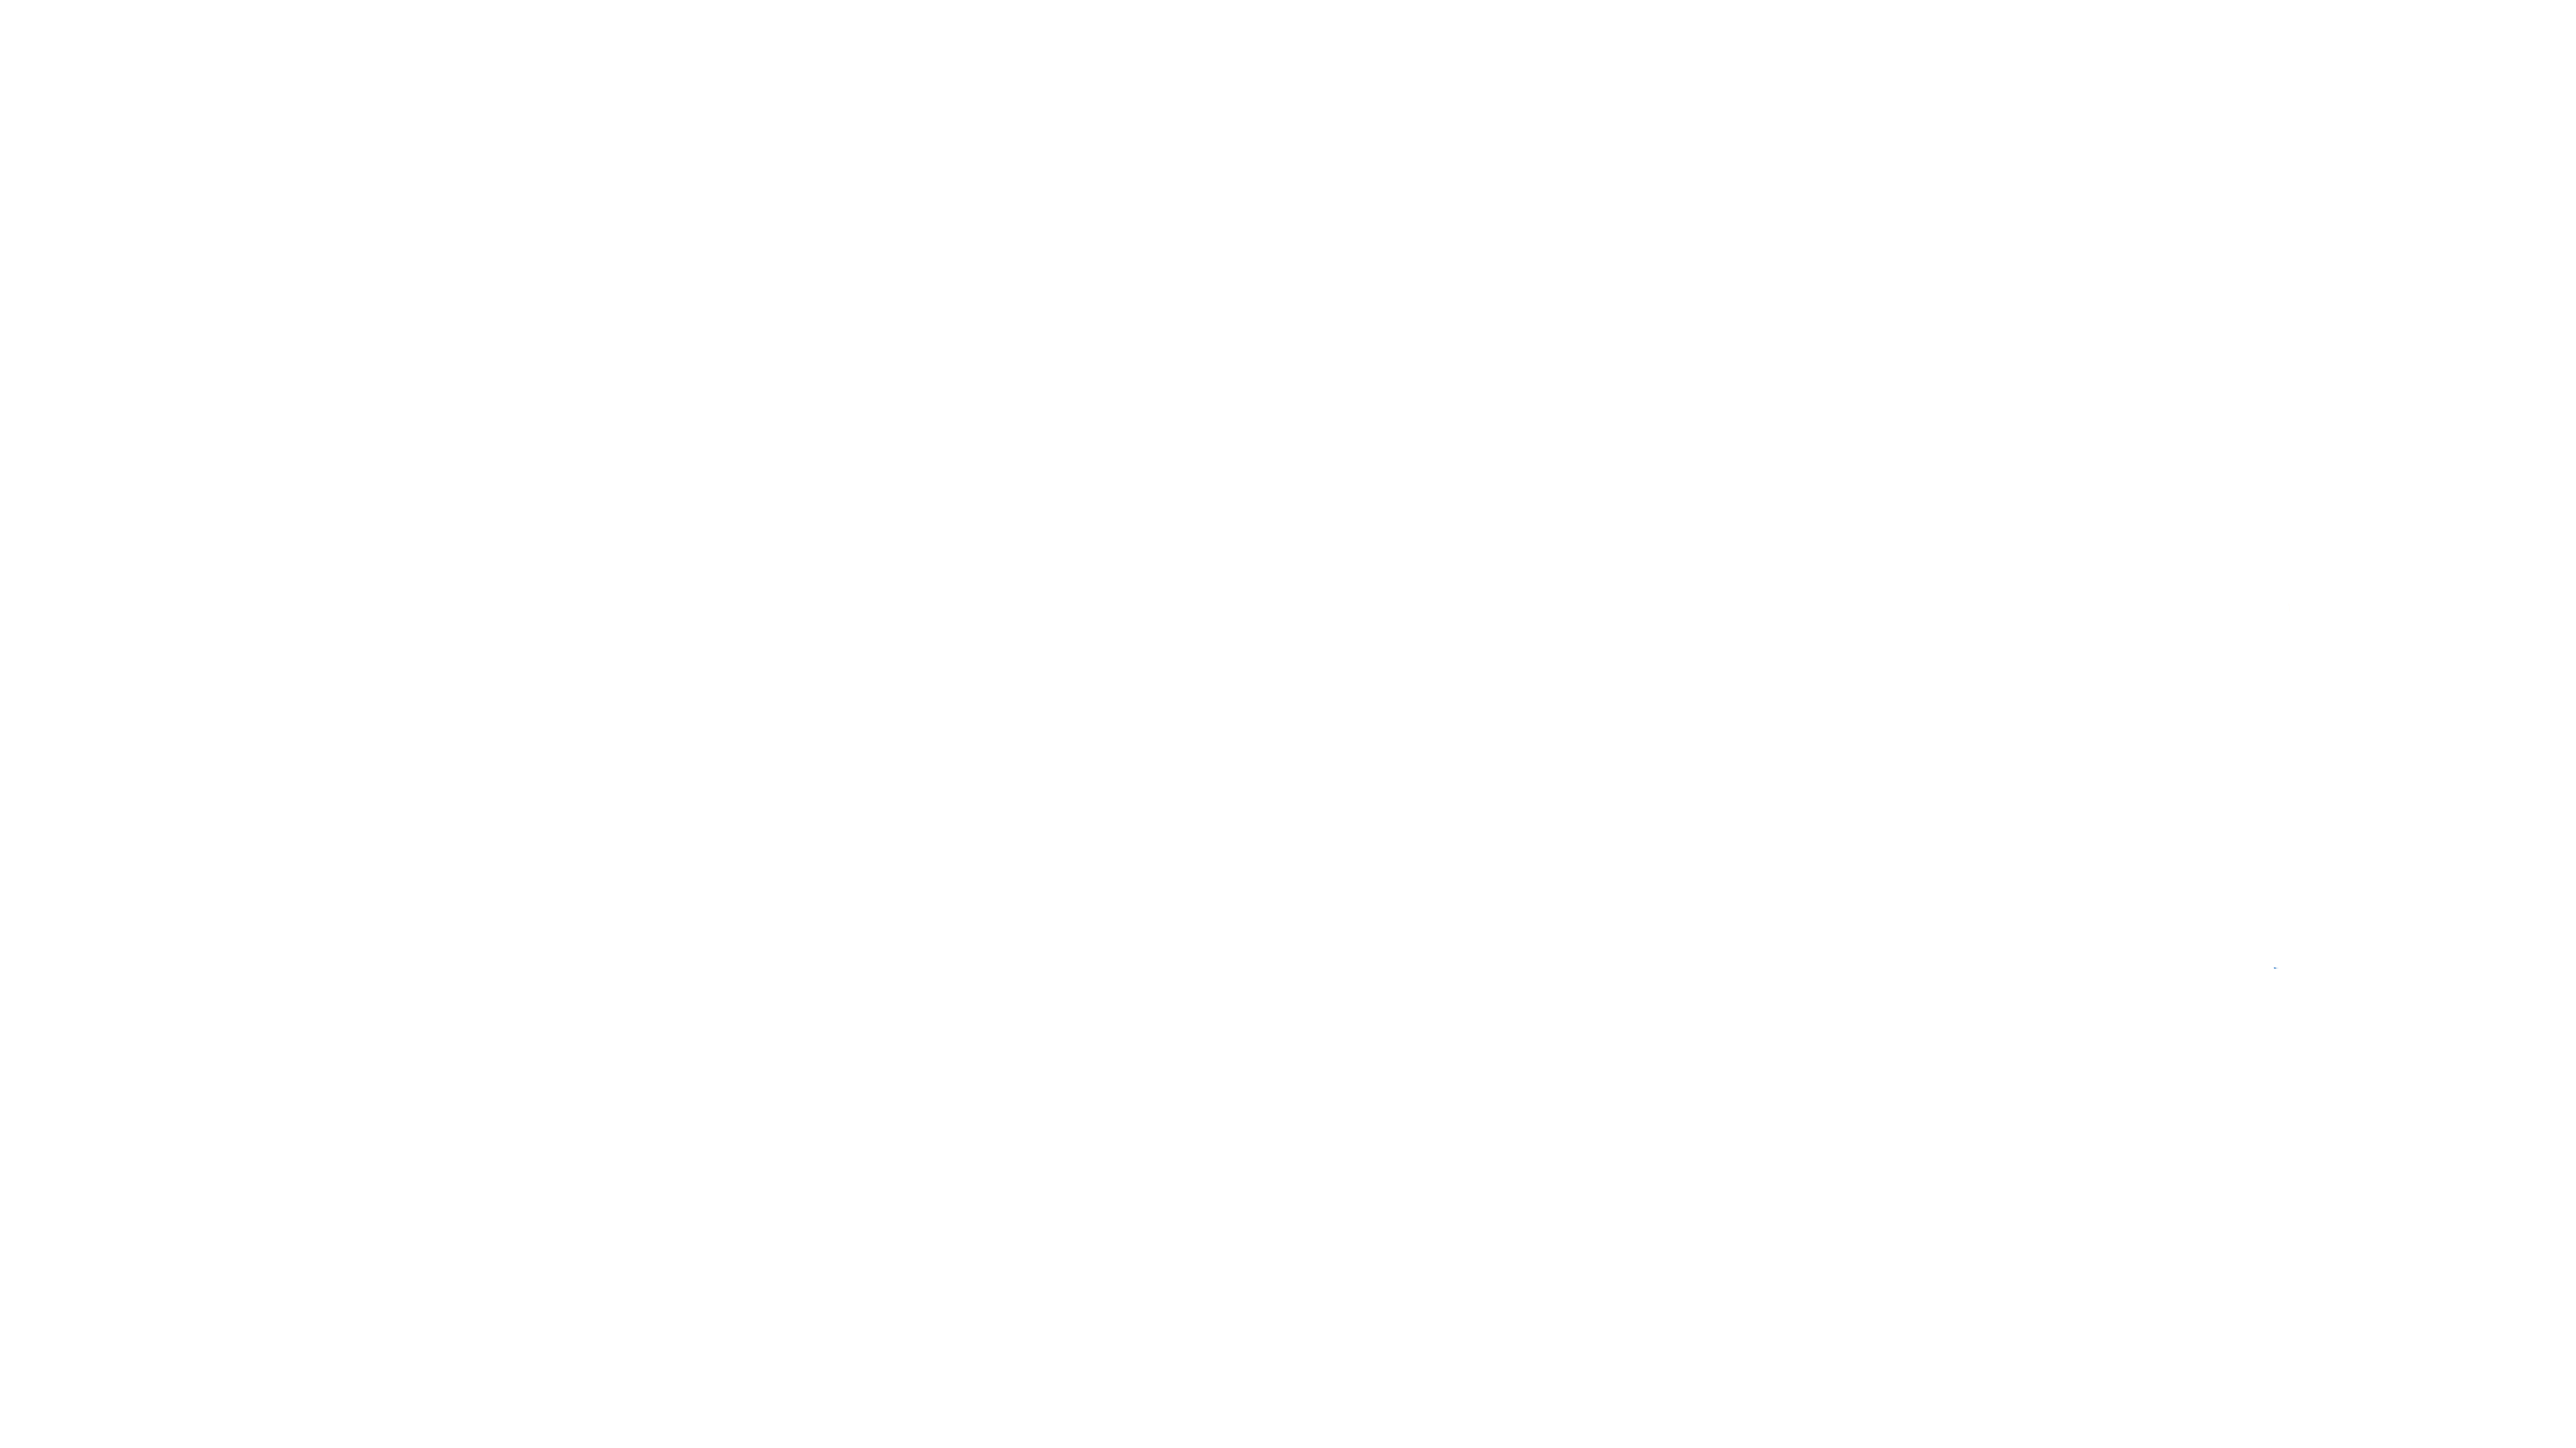 ATP tennis event